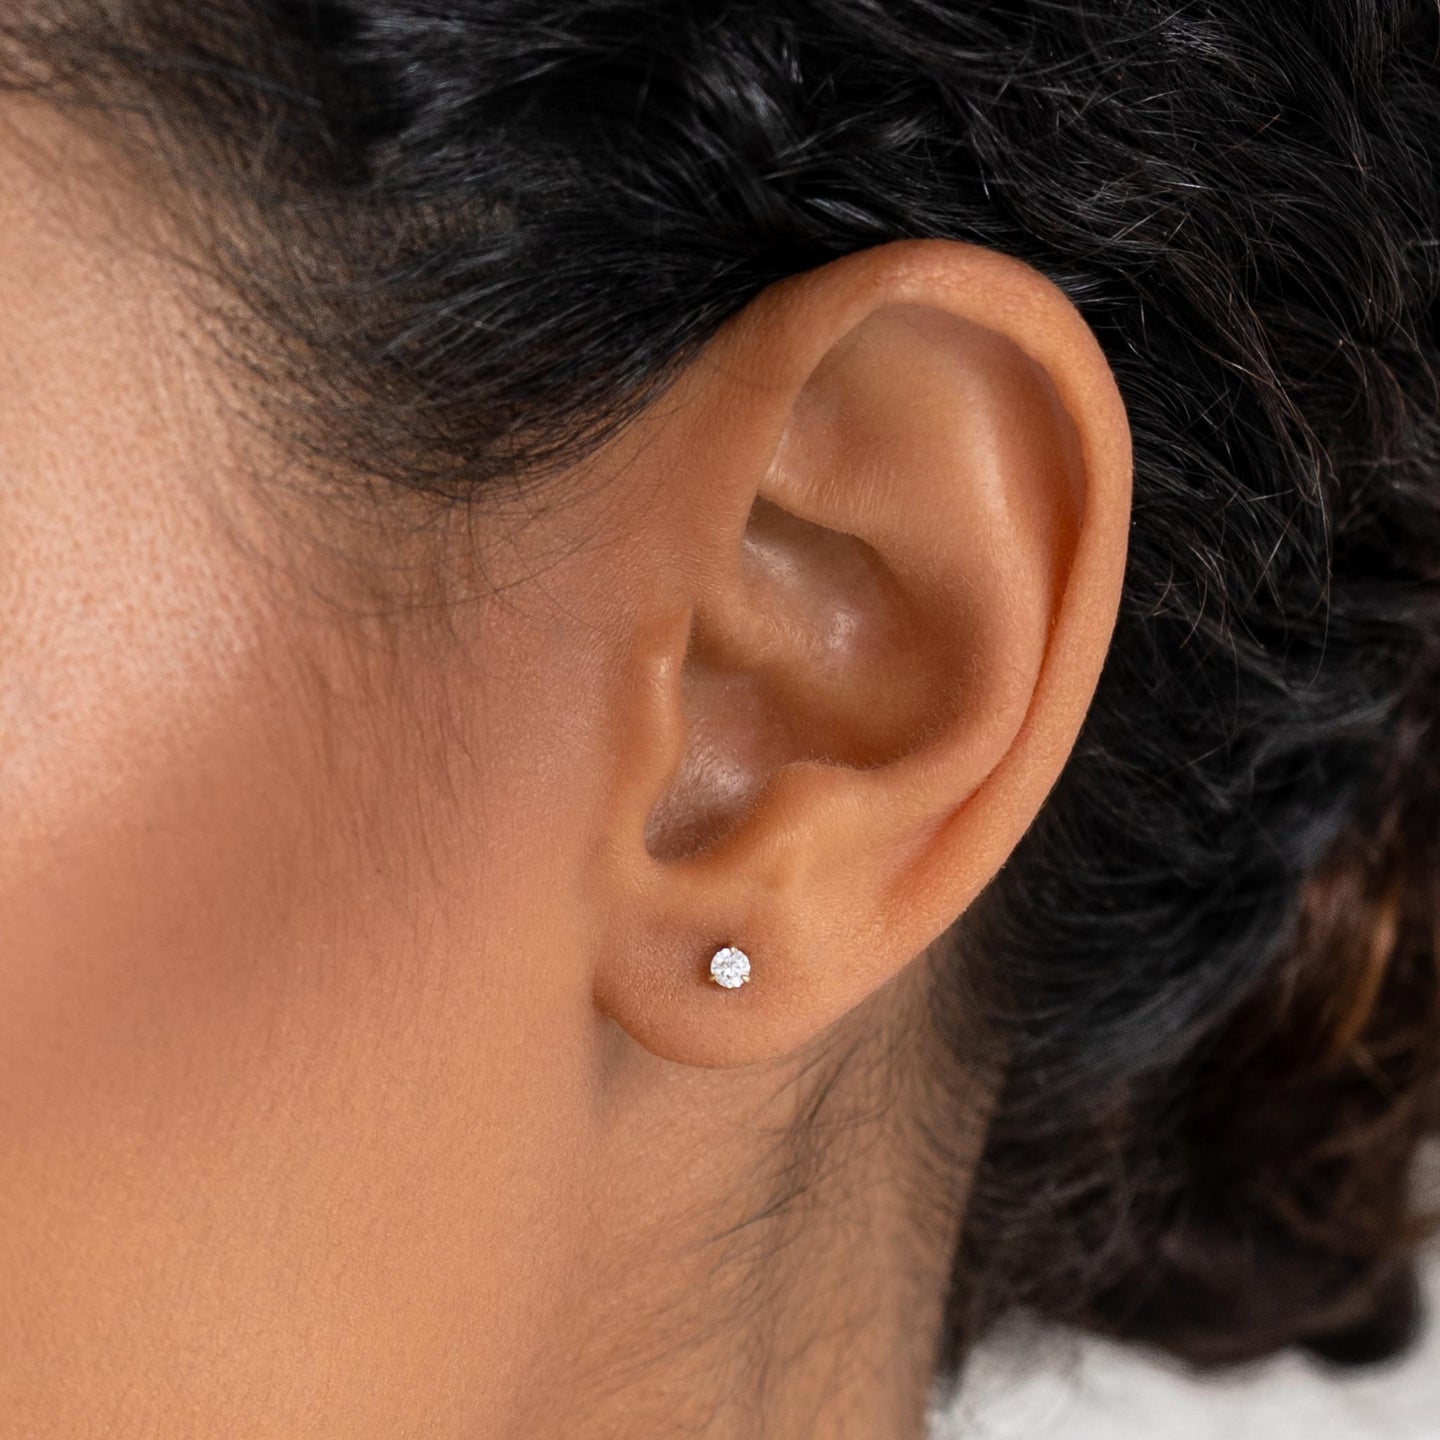 April Birthstone Stud Earrings 14k Gold - White Sapphire